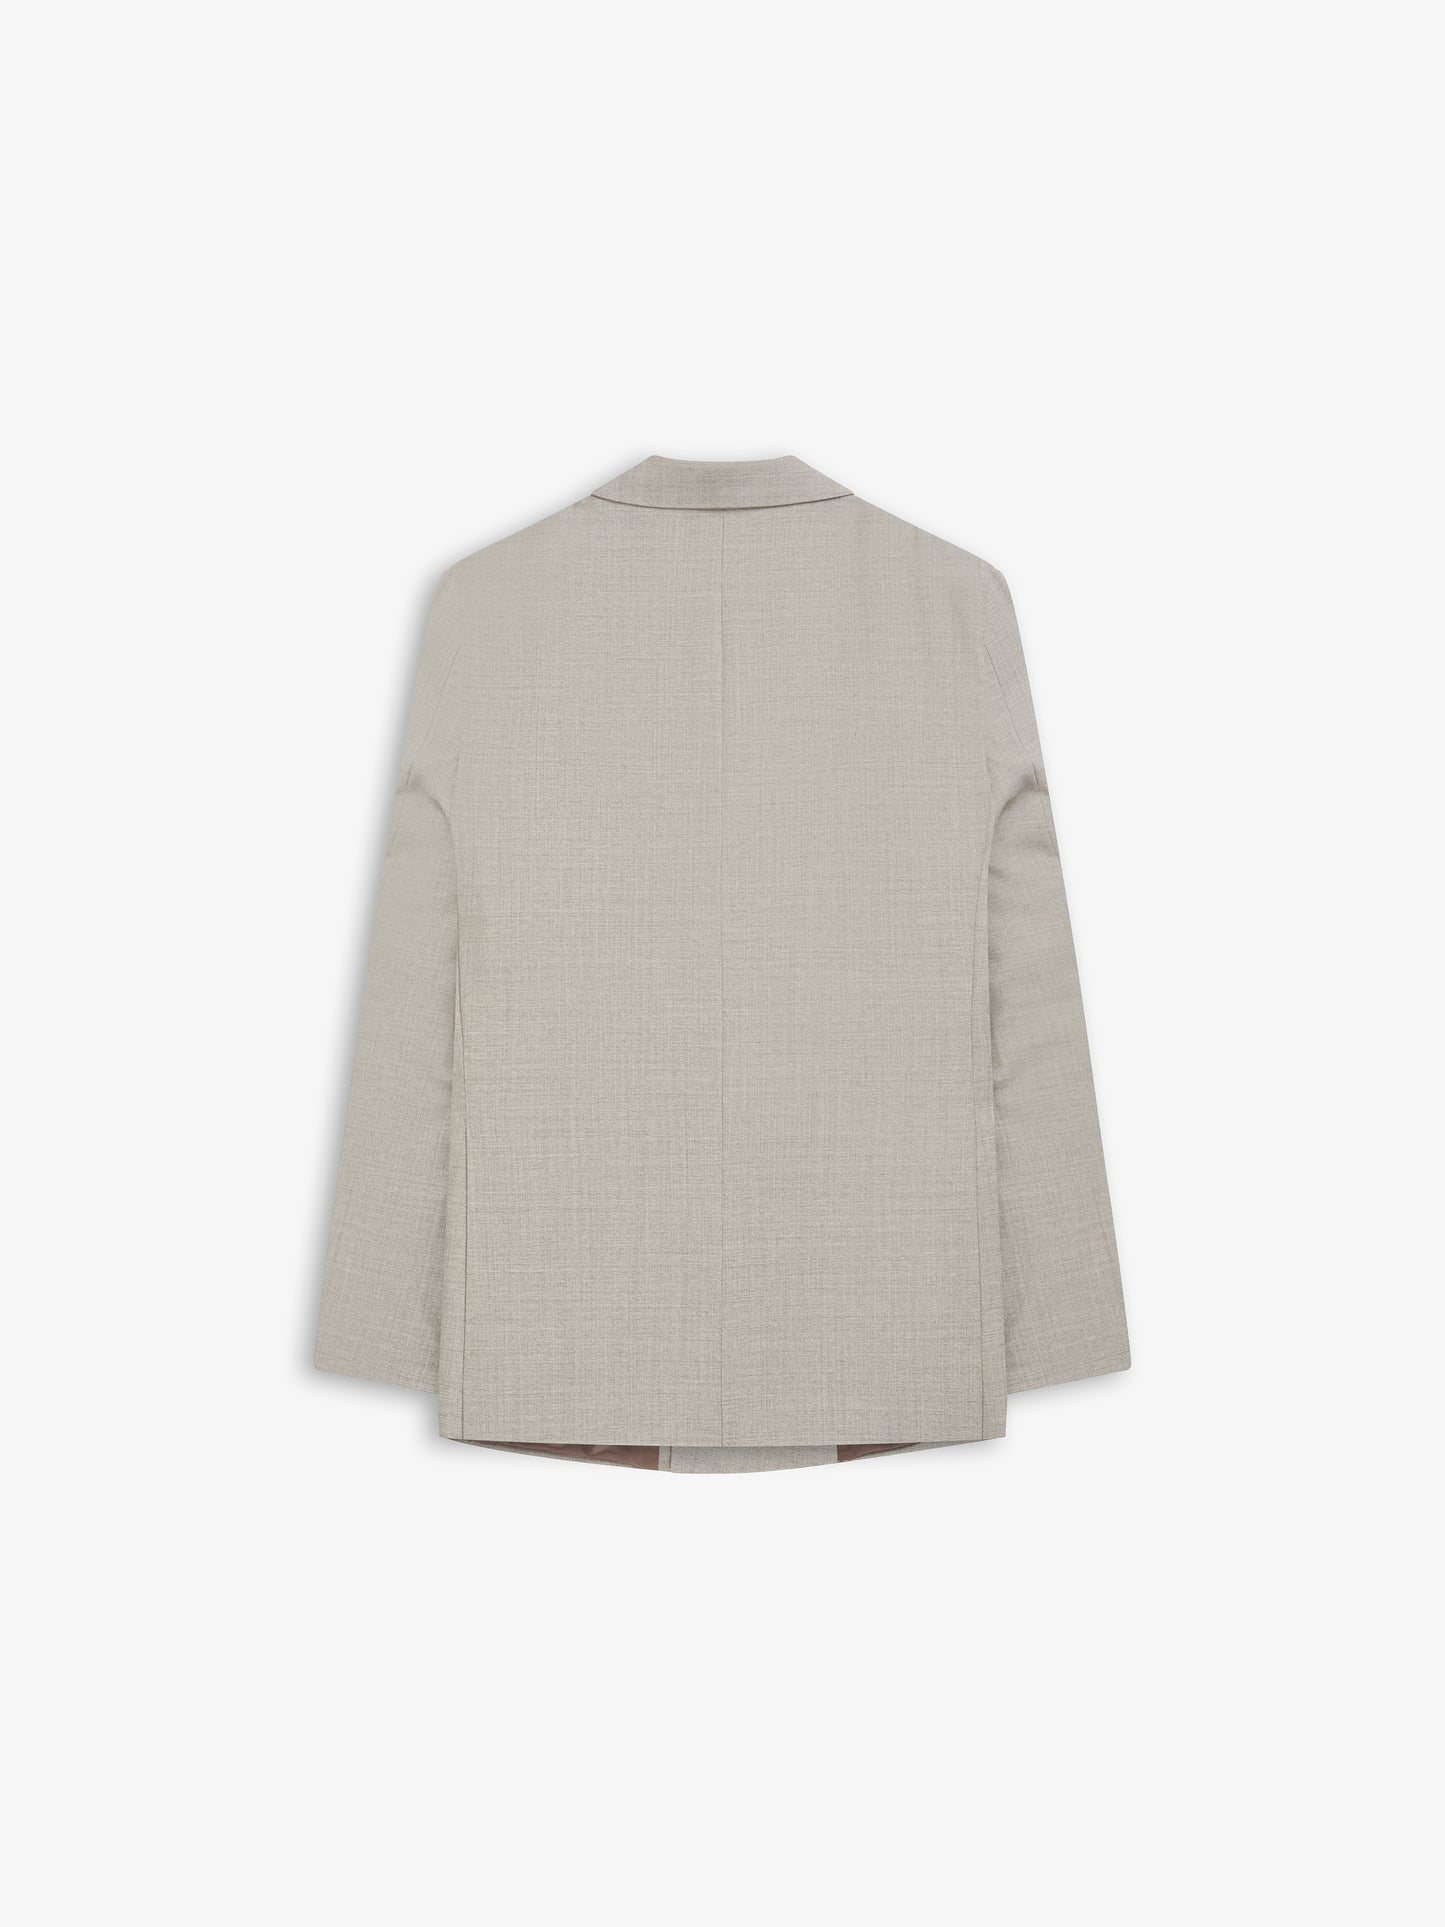 Venaria Italian Luxury Slim Double Breasted Beige Suit Jacket